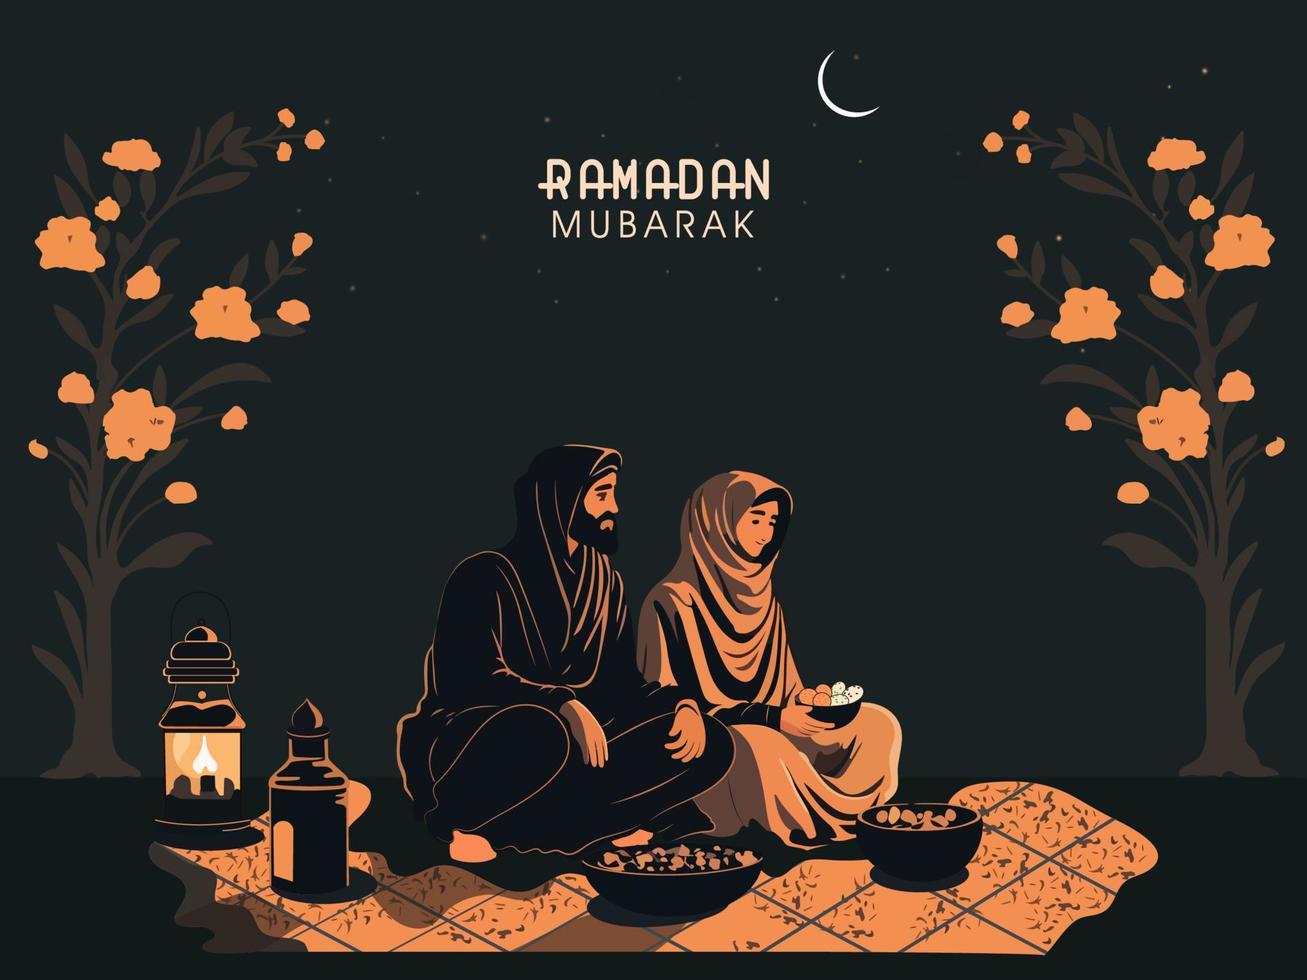 Ramadan Mubarak Greeting Card With Muslim Couple Character Enjoying Delicious Food On Crescent Moon Night Background. vector